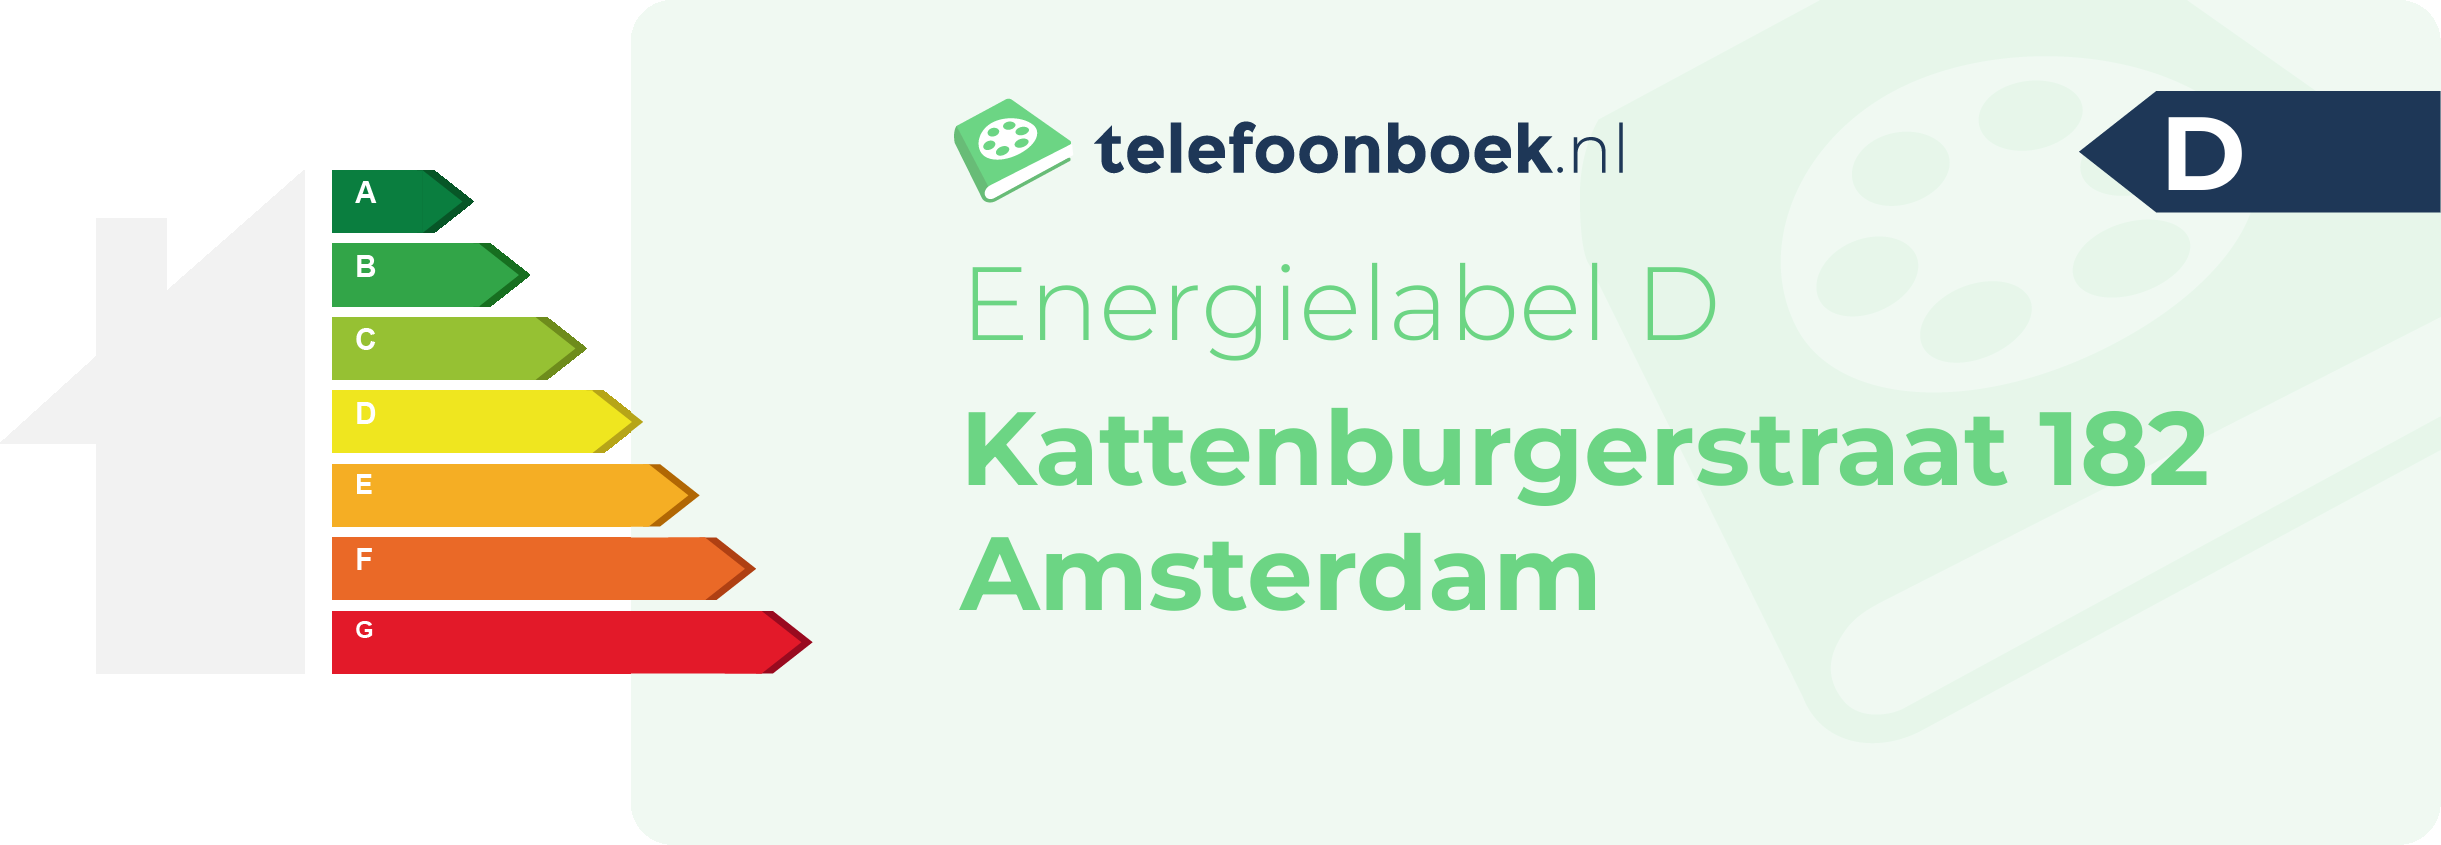 Energielabel Kattenburgerstraat 182 Amsterdam